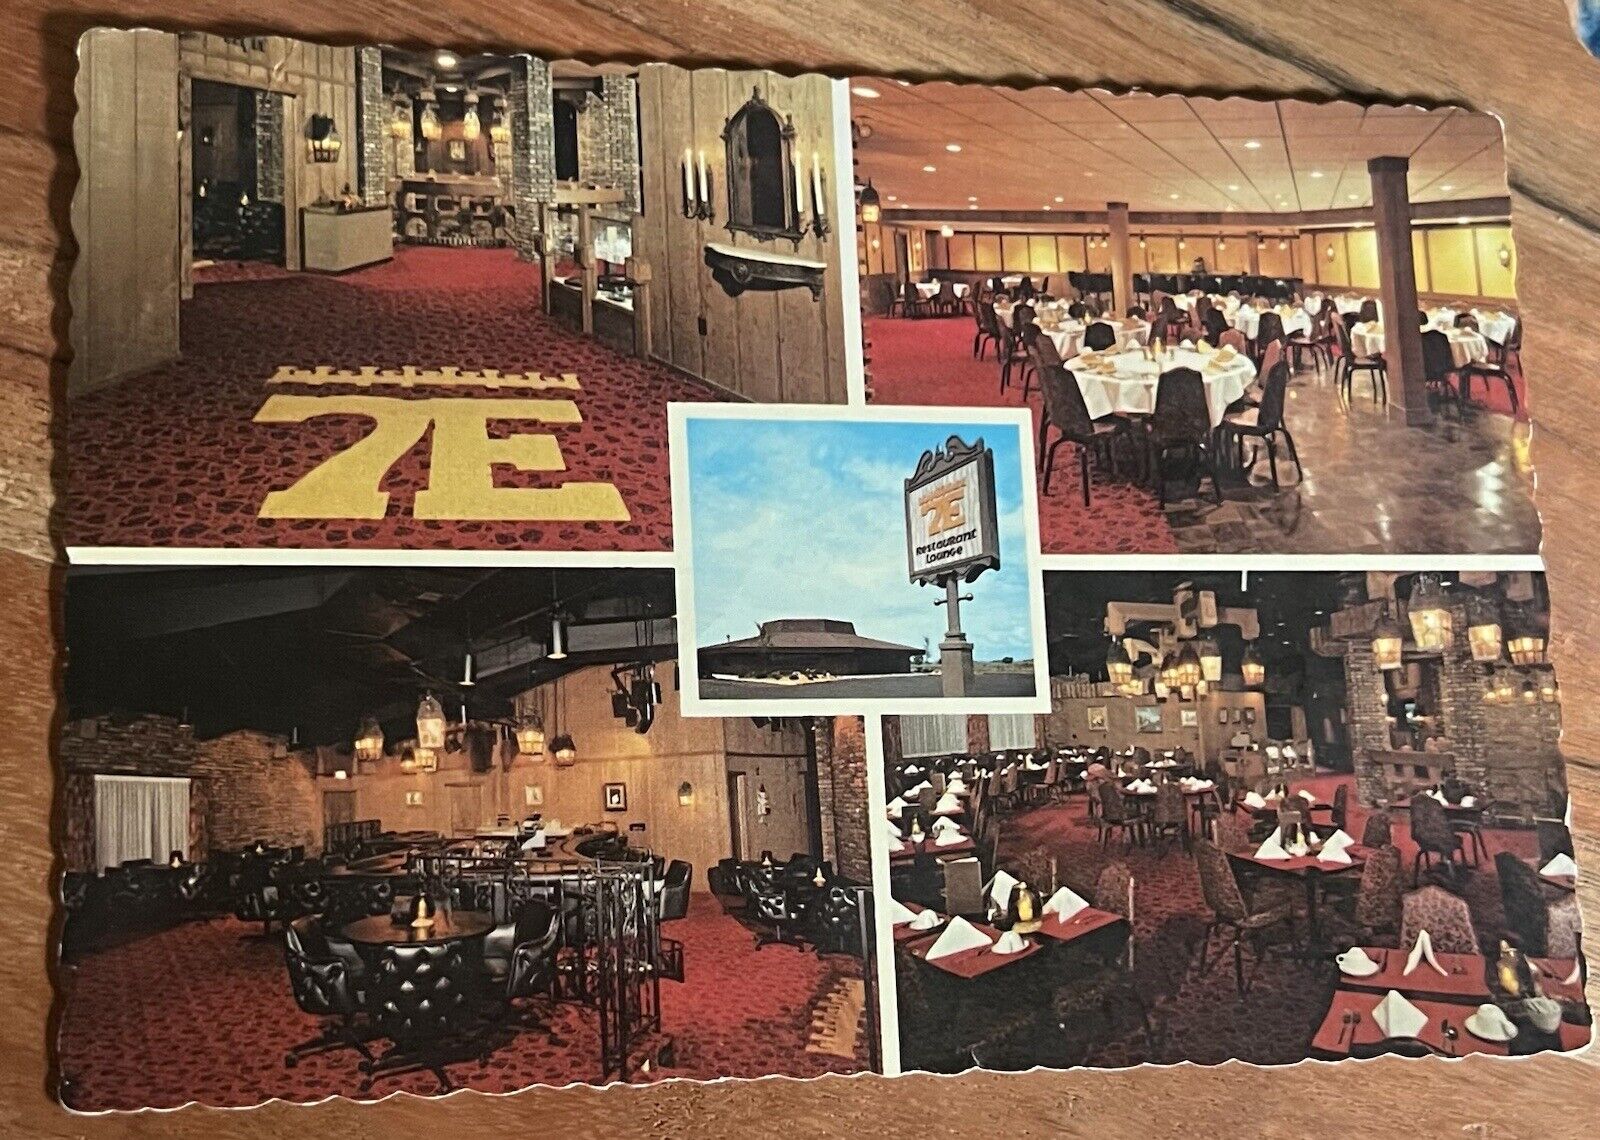 Vintage Supper Club Postcard Interior 7E Supper Club DeForest WI Wisconsin USA